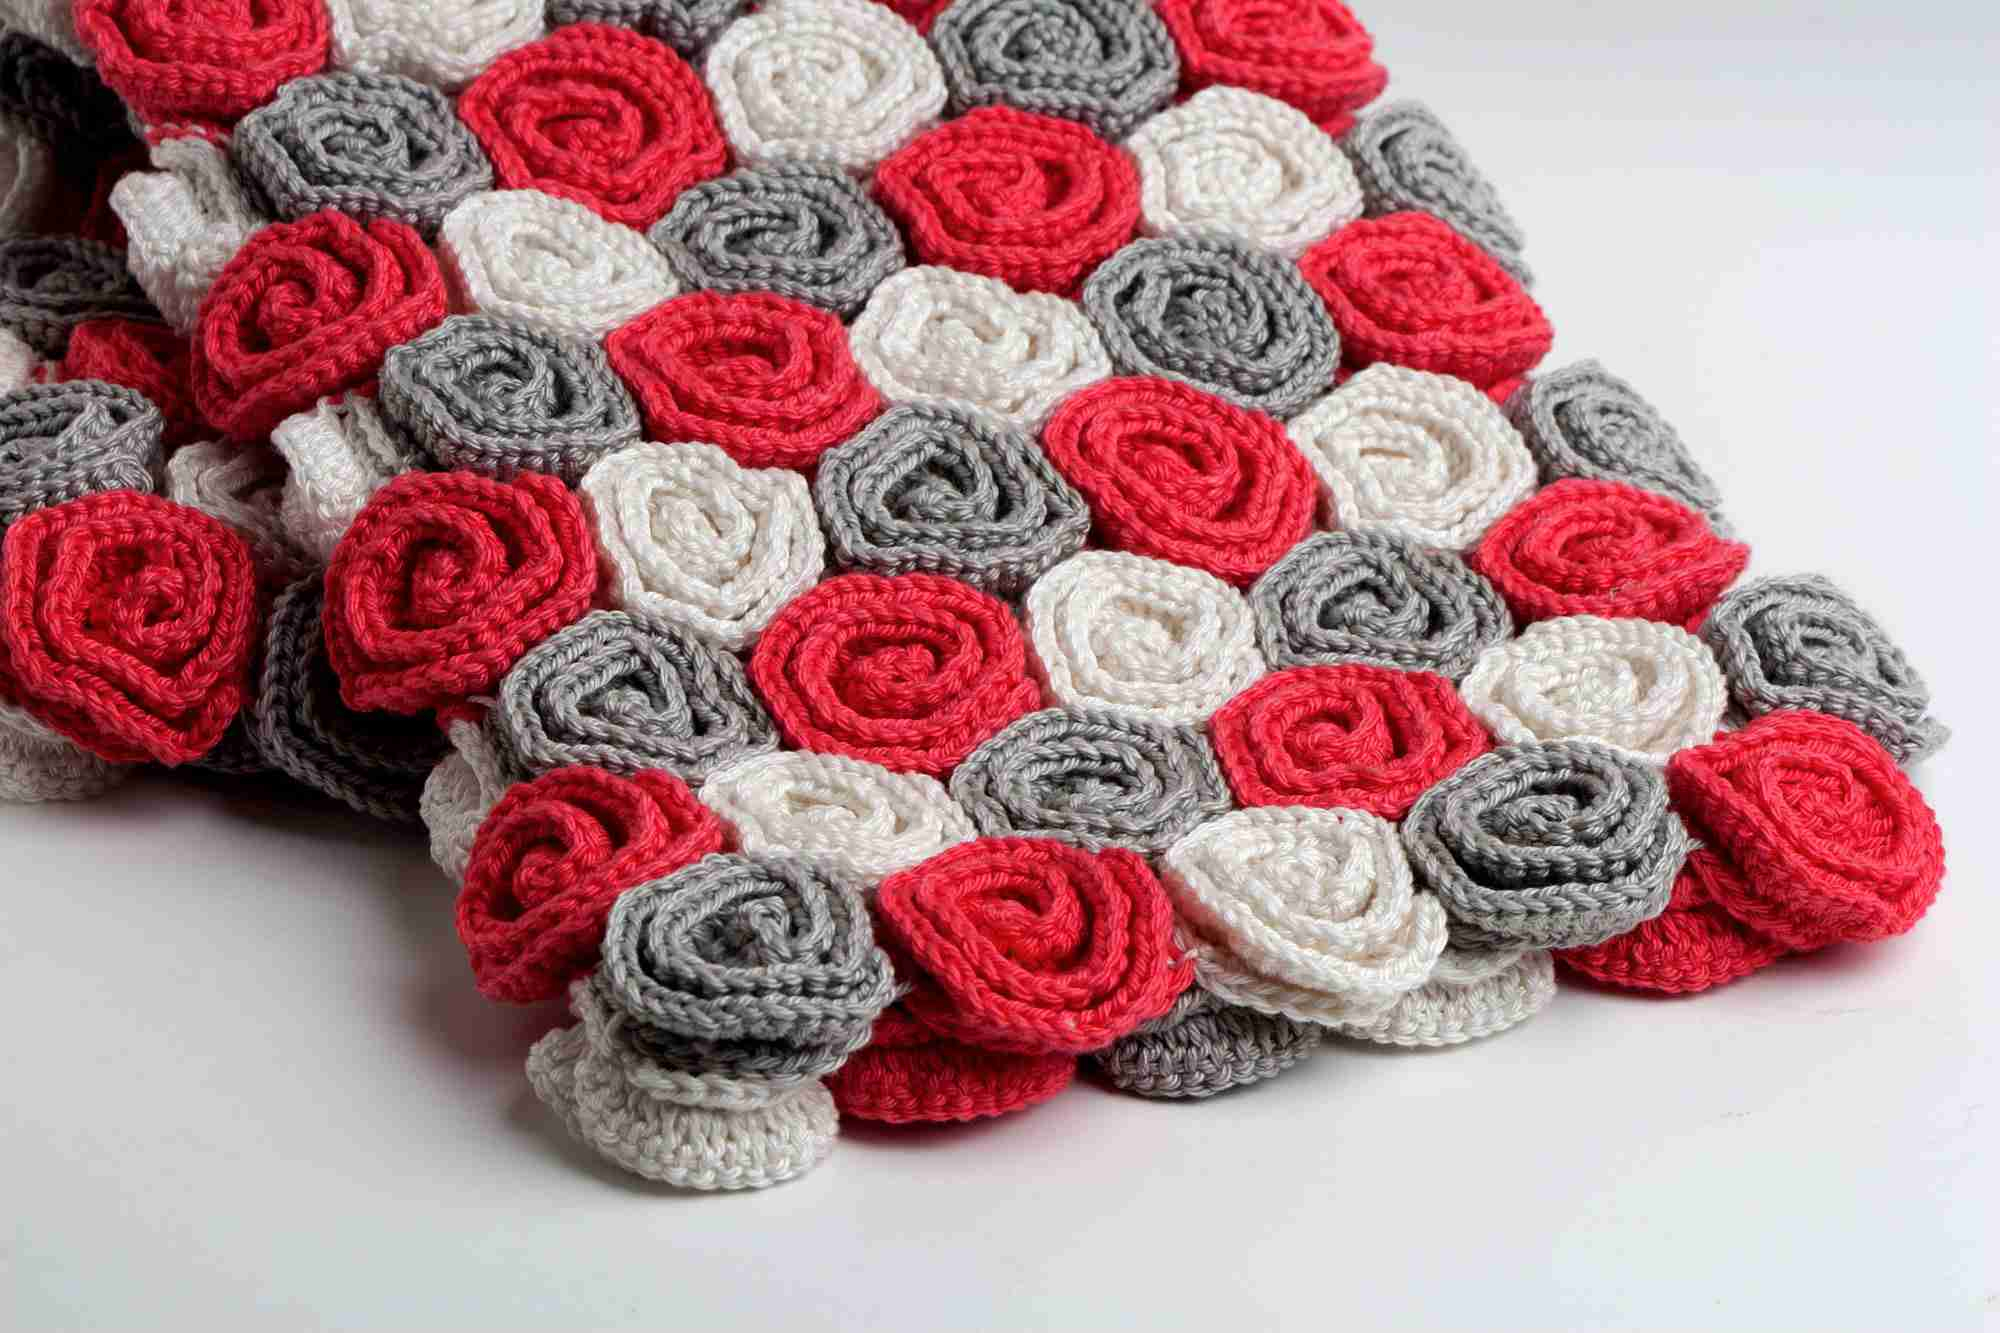 Fall Crochet Patterns 9 Crochet Patterns For Roses